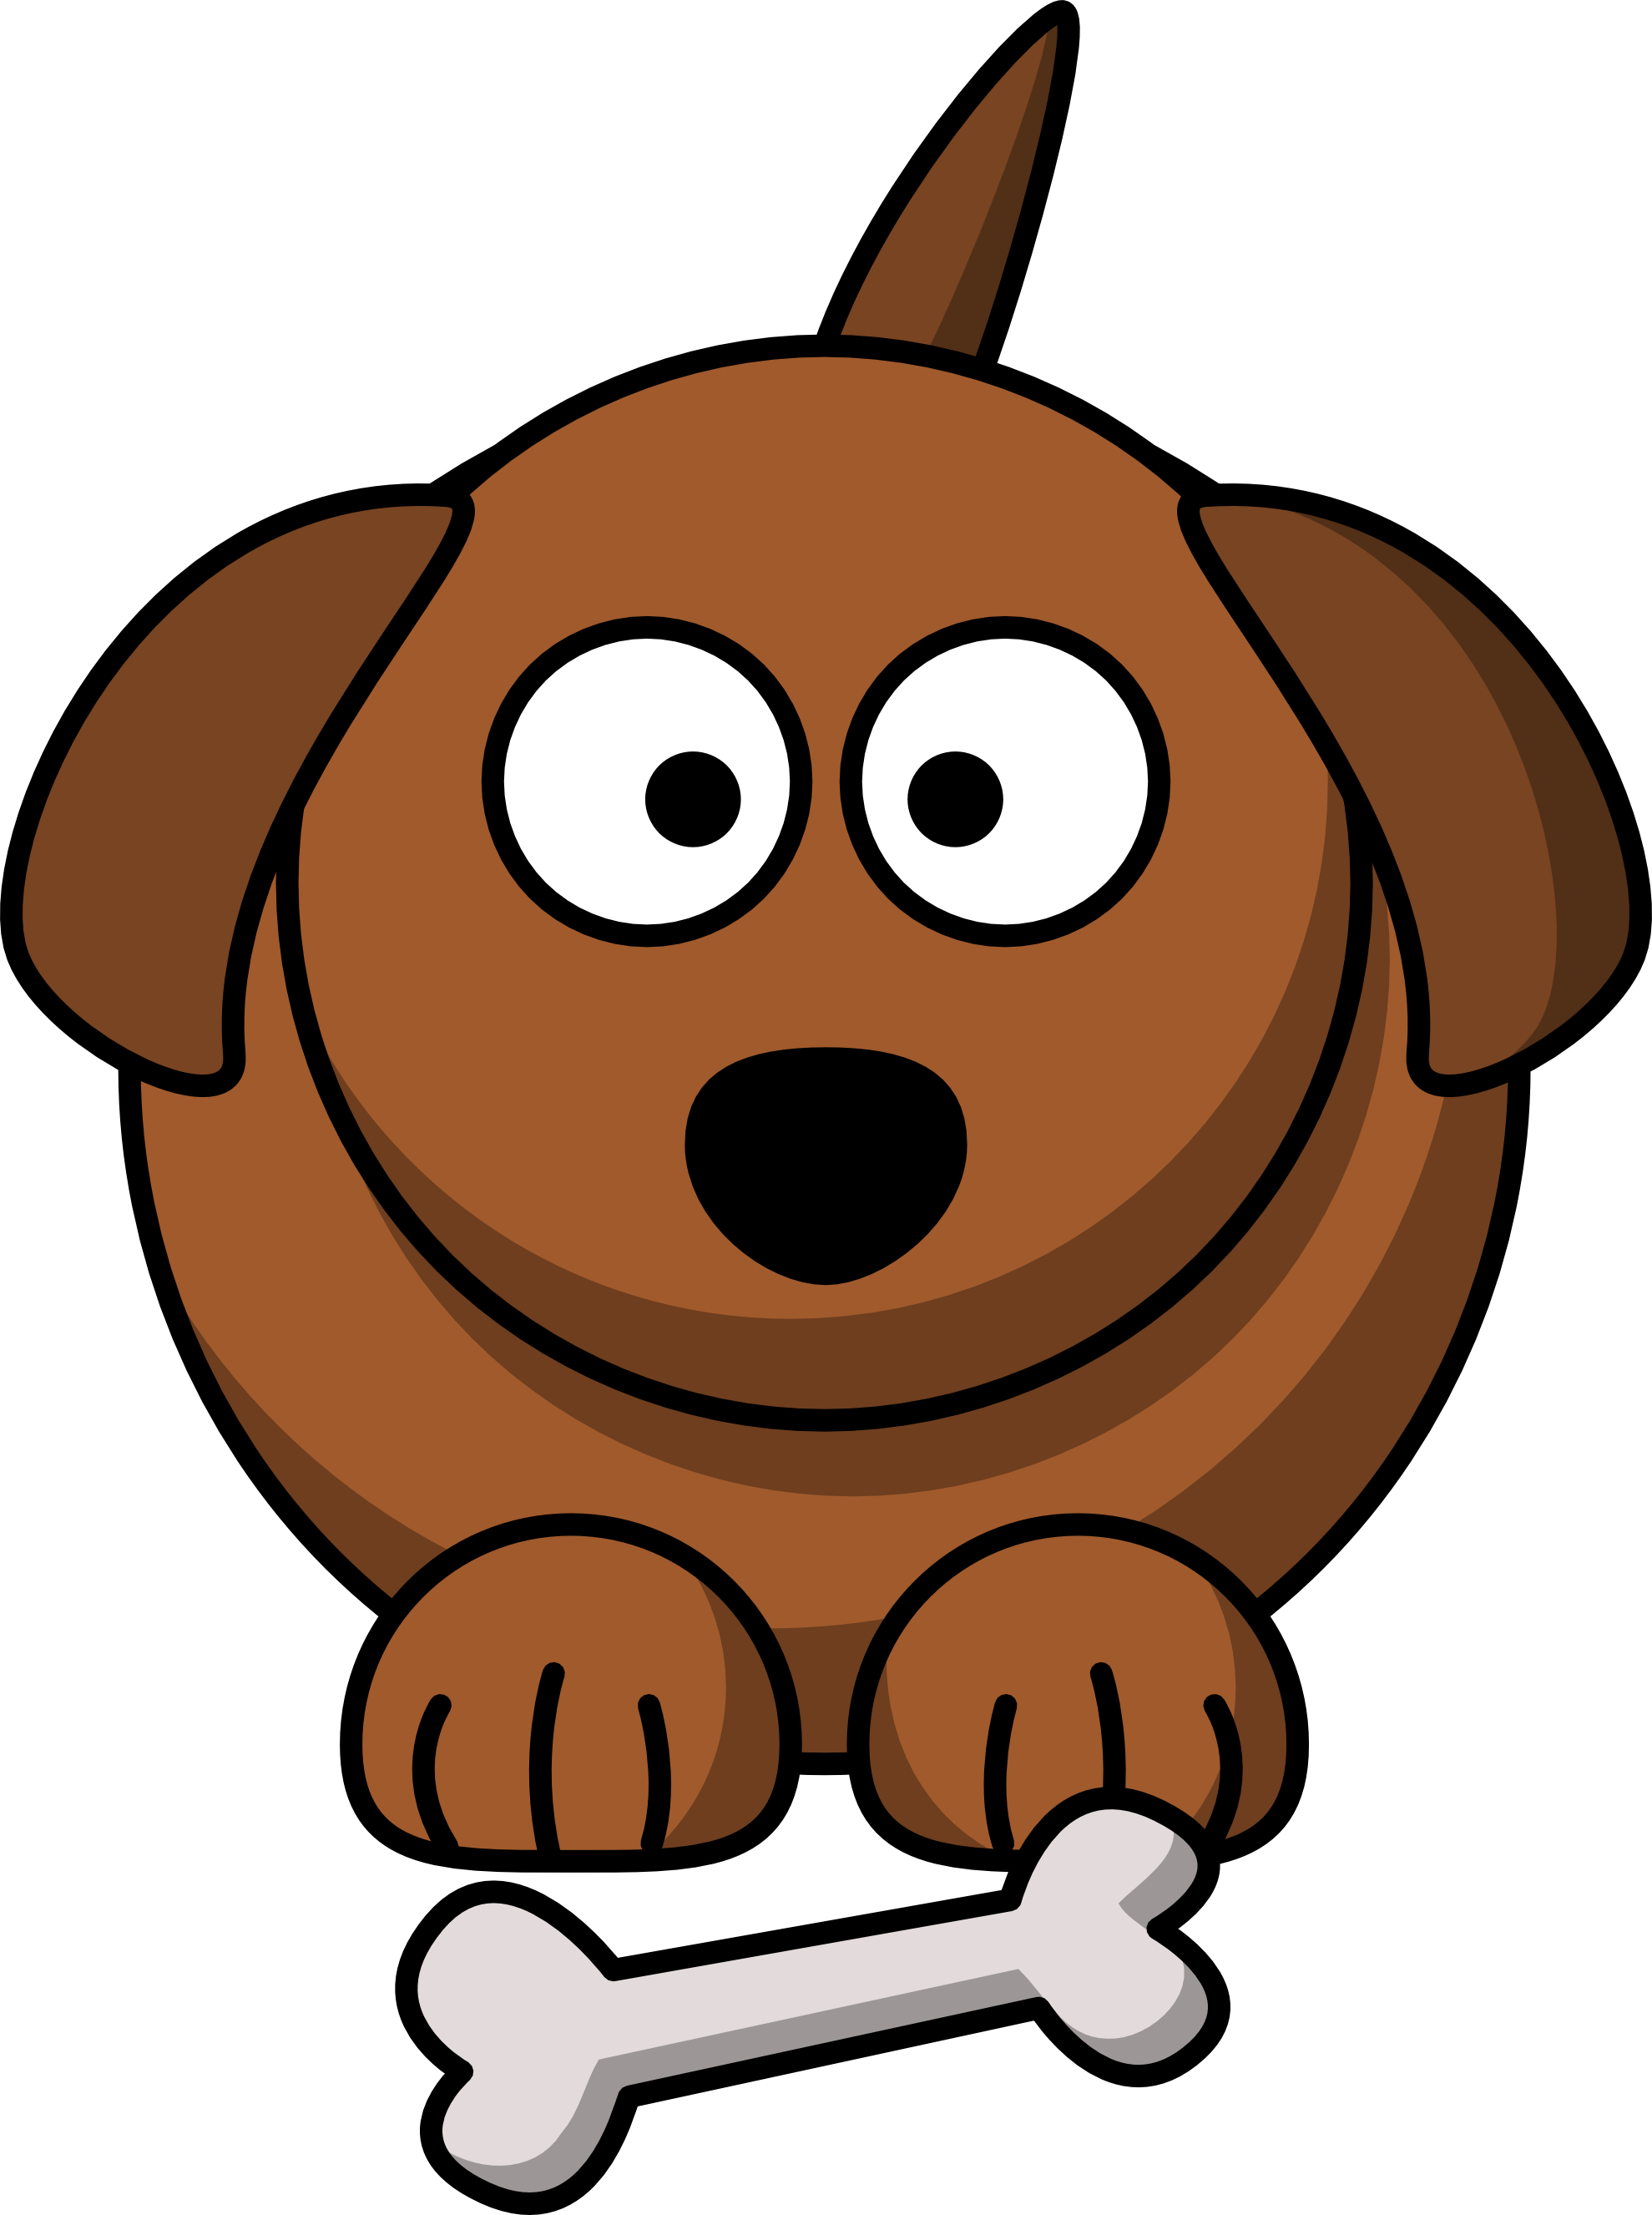 Stuffed Animal Clipart | Free Download Clip Art | Free Clip Art ...